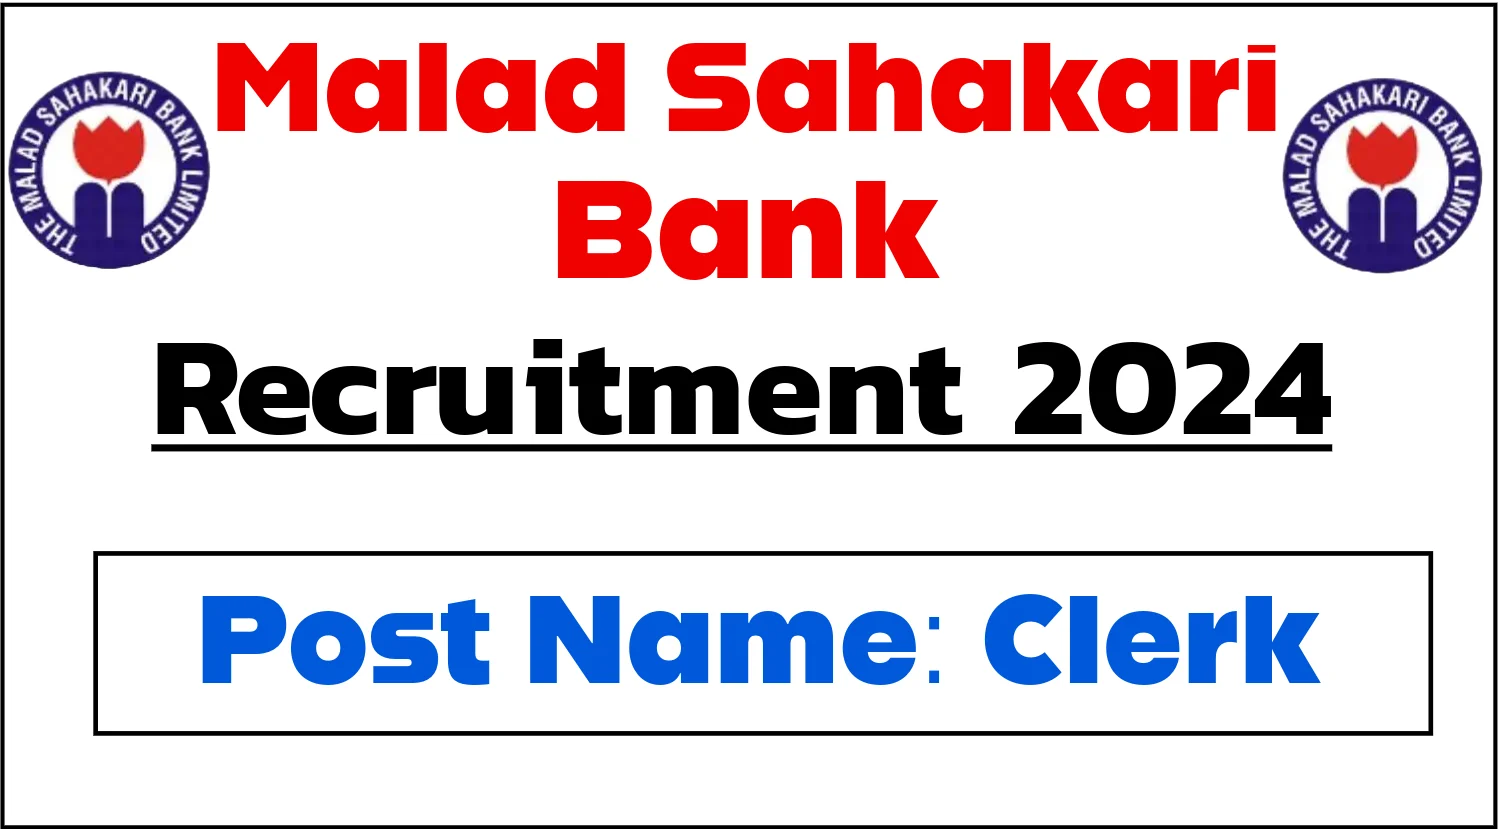 Malad Sahakari Bank Recruitment 2024 for Clerk Posts